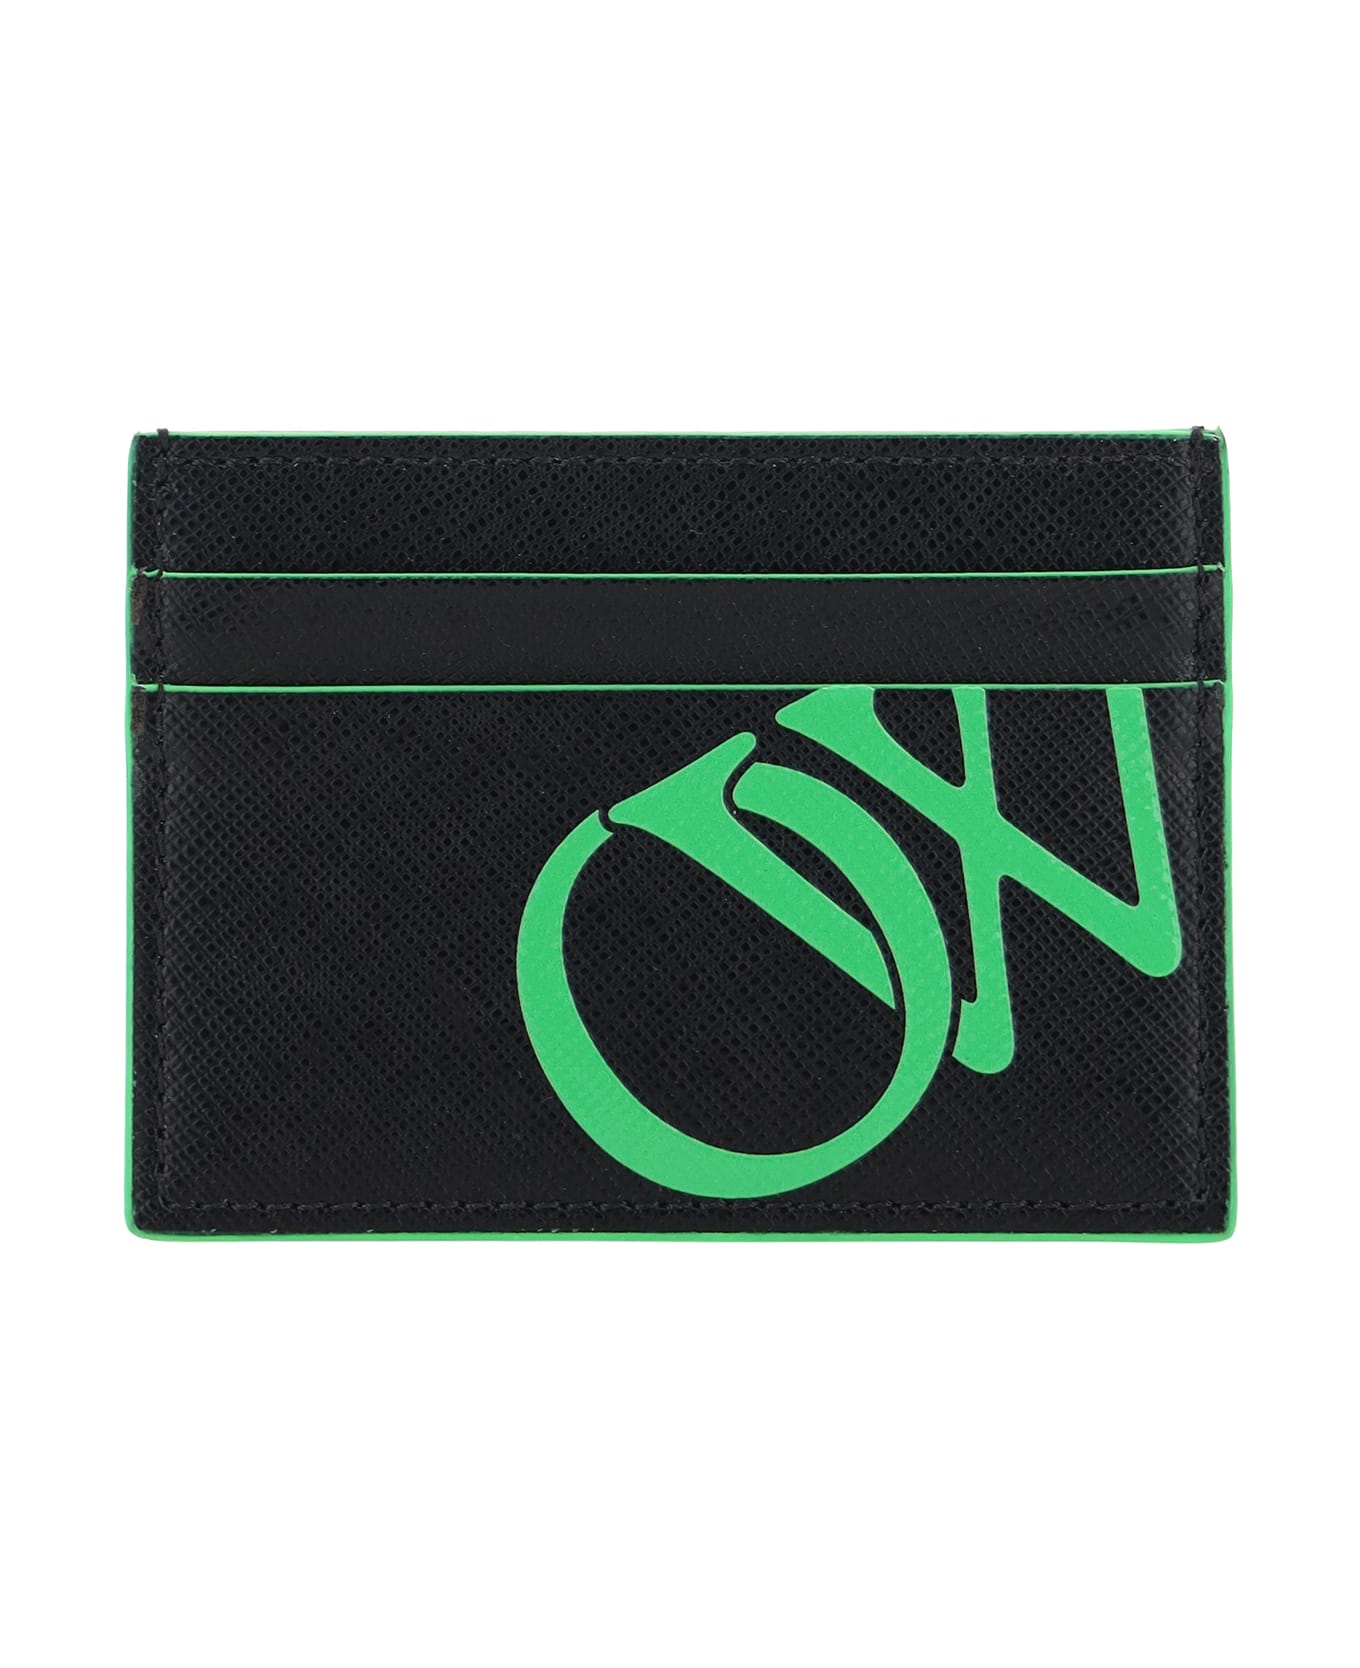 Off-White Card Holder - Black Green Fluo